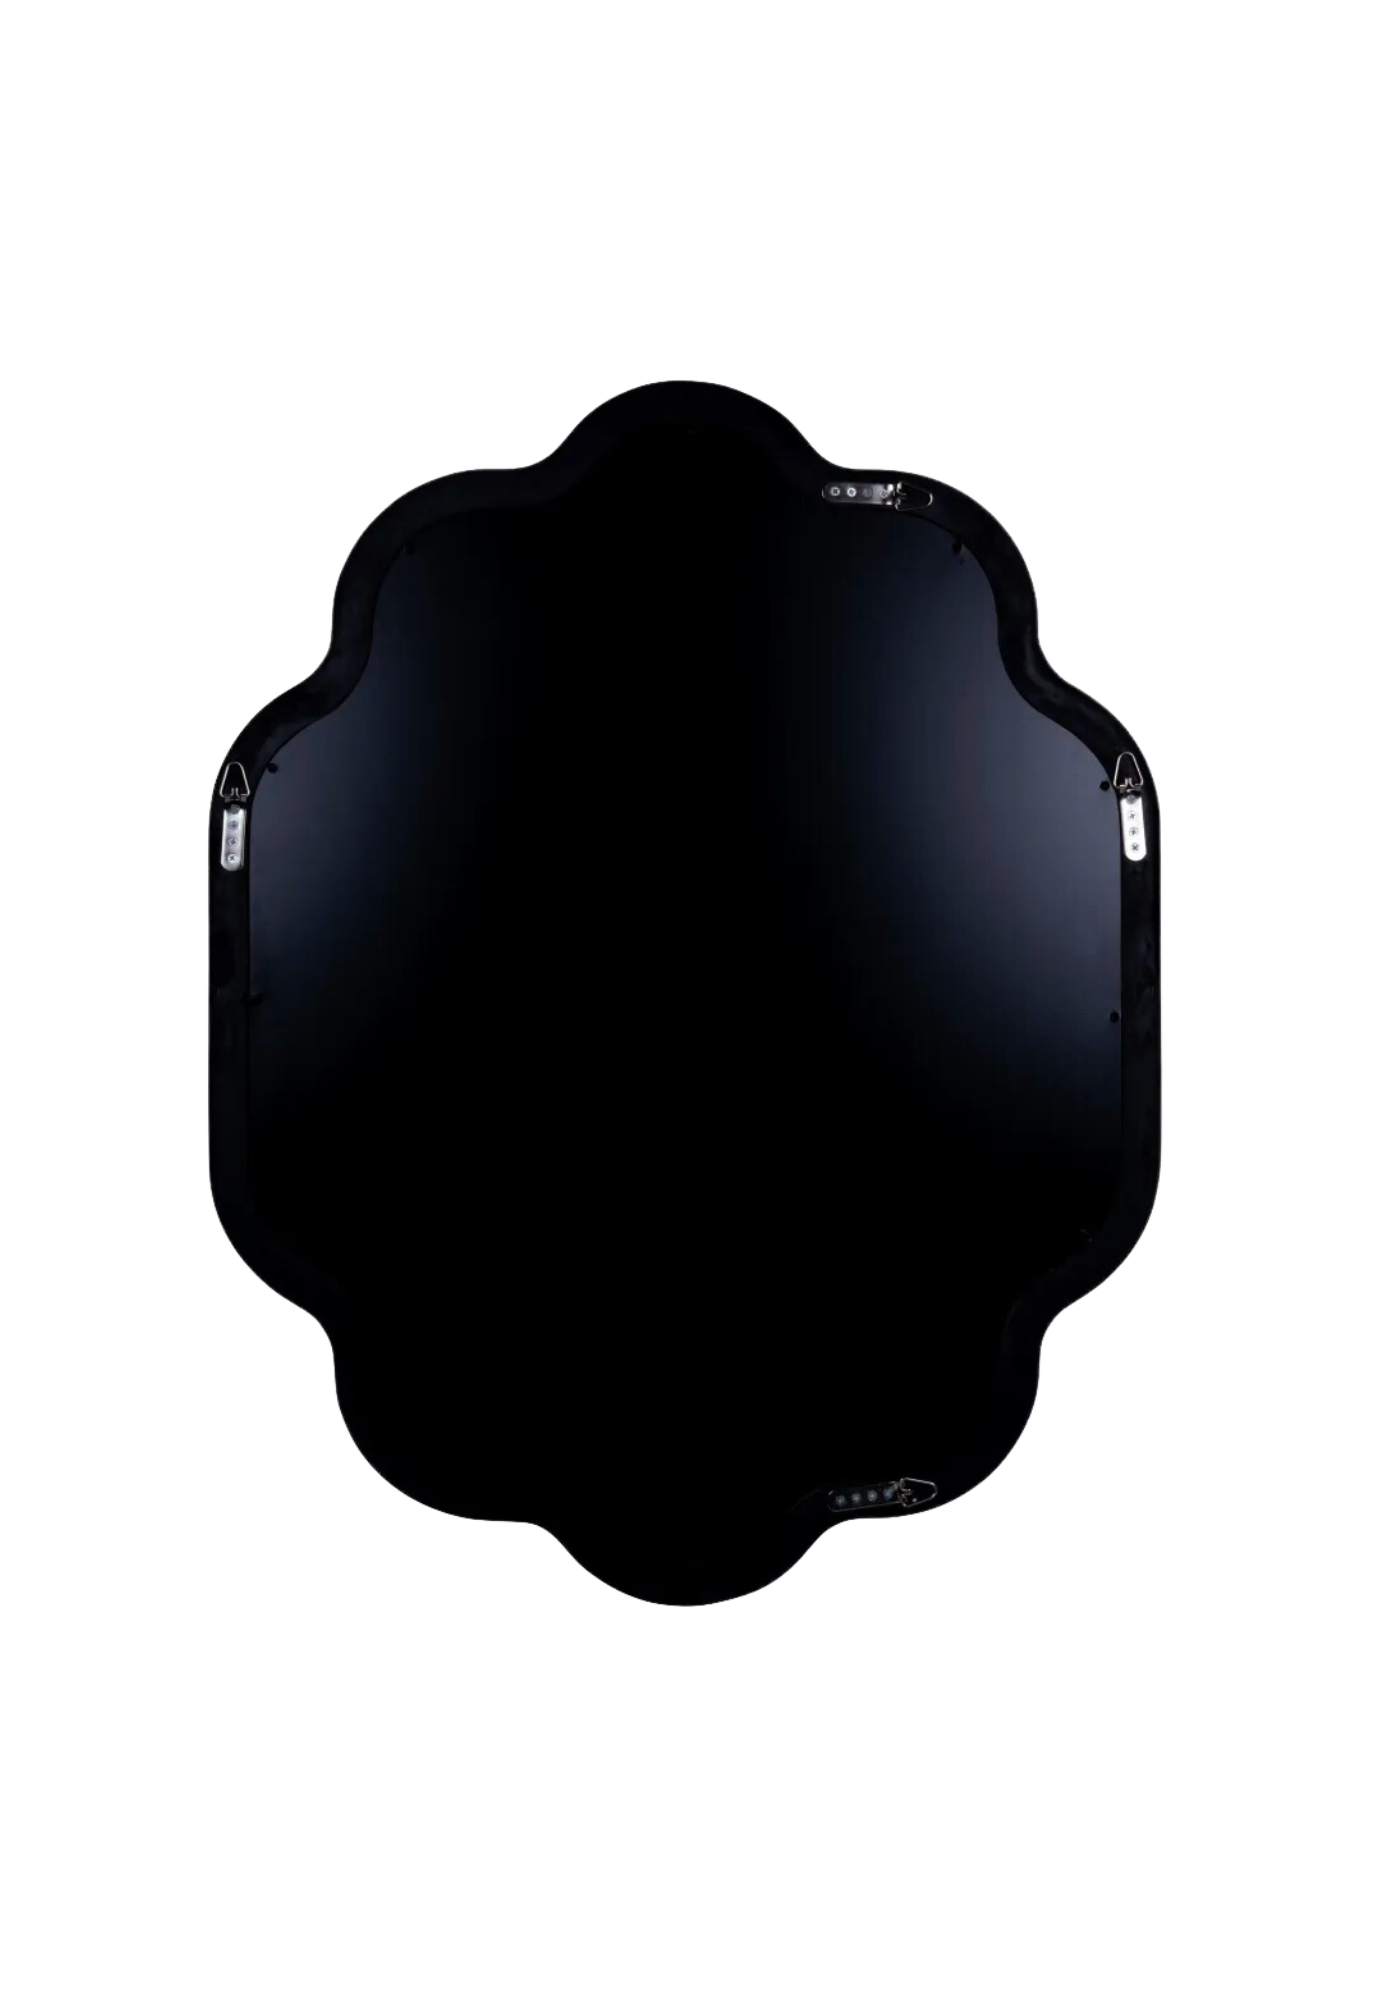 Wavy Black Oval Mirror